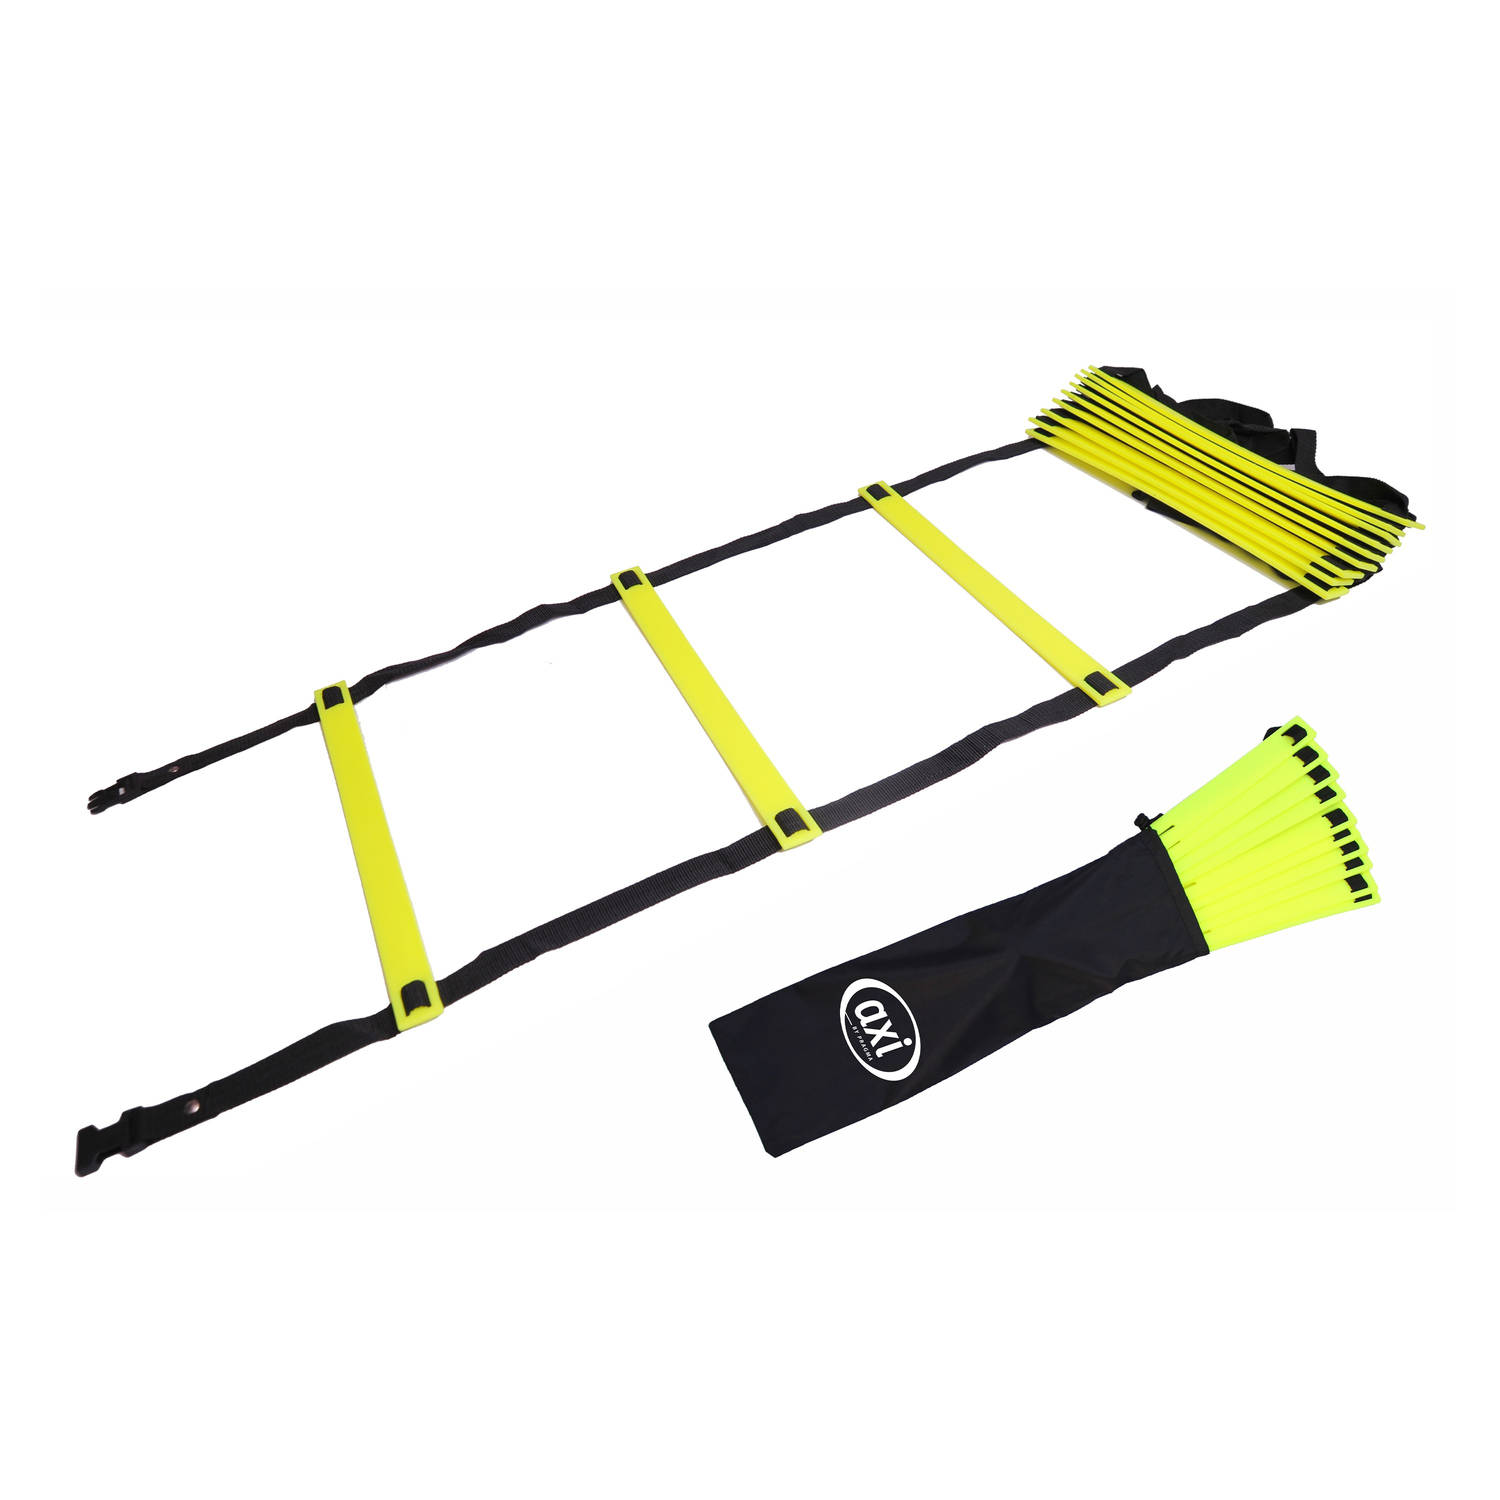 AXI SpeedLadder600 – Loopladder 6 meter – Agility speed ladder – Sport ladder – Fitness - Voetbal - Revalidatie